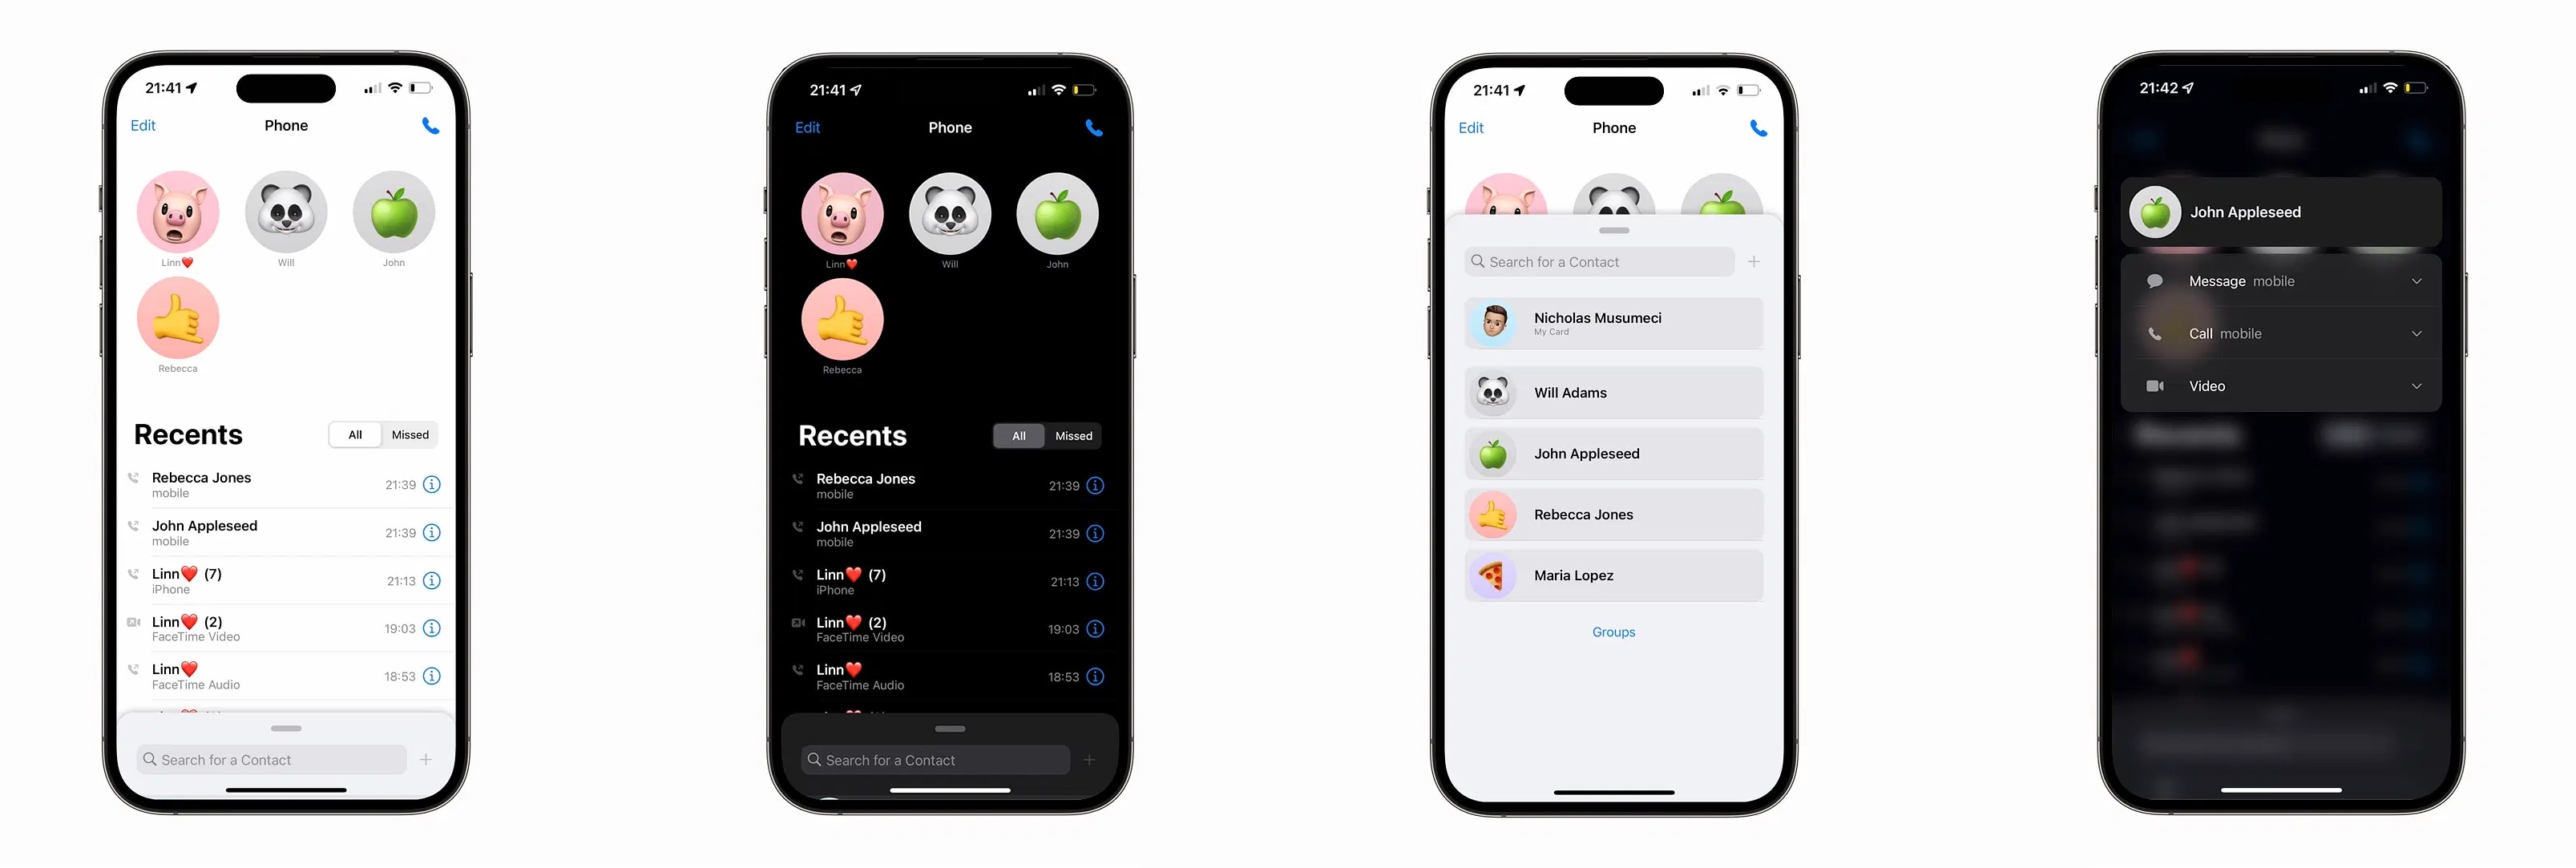 Novus unifies the Phone app's features into a better interface on jailbroken iPhones.